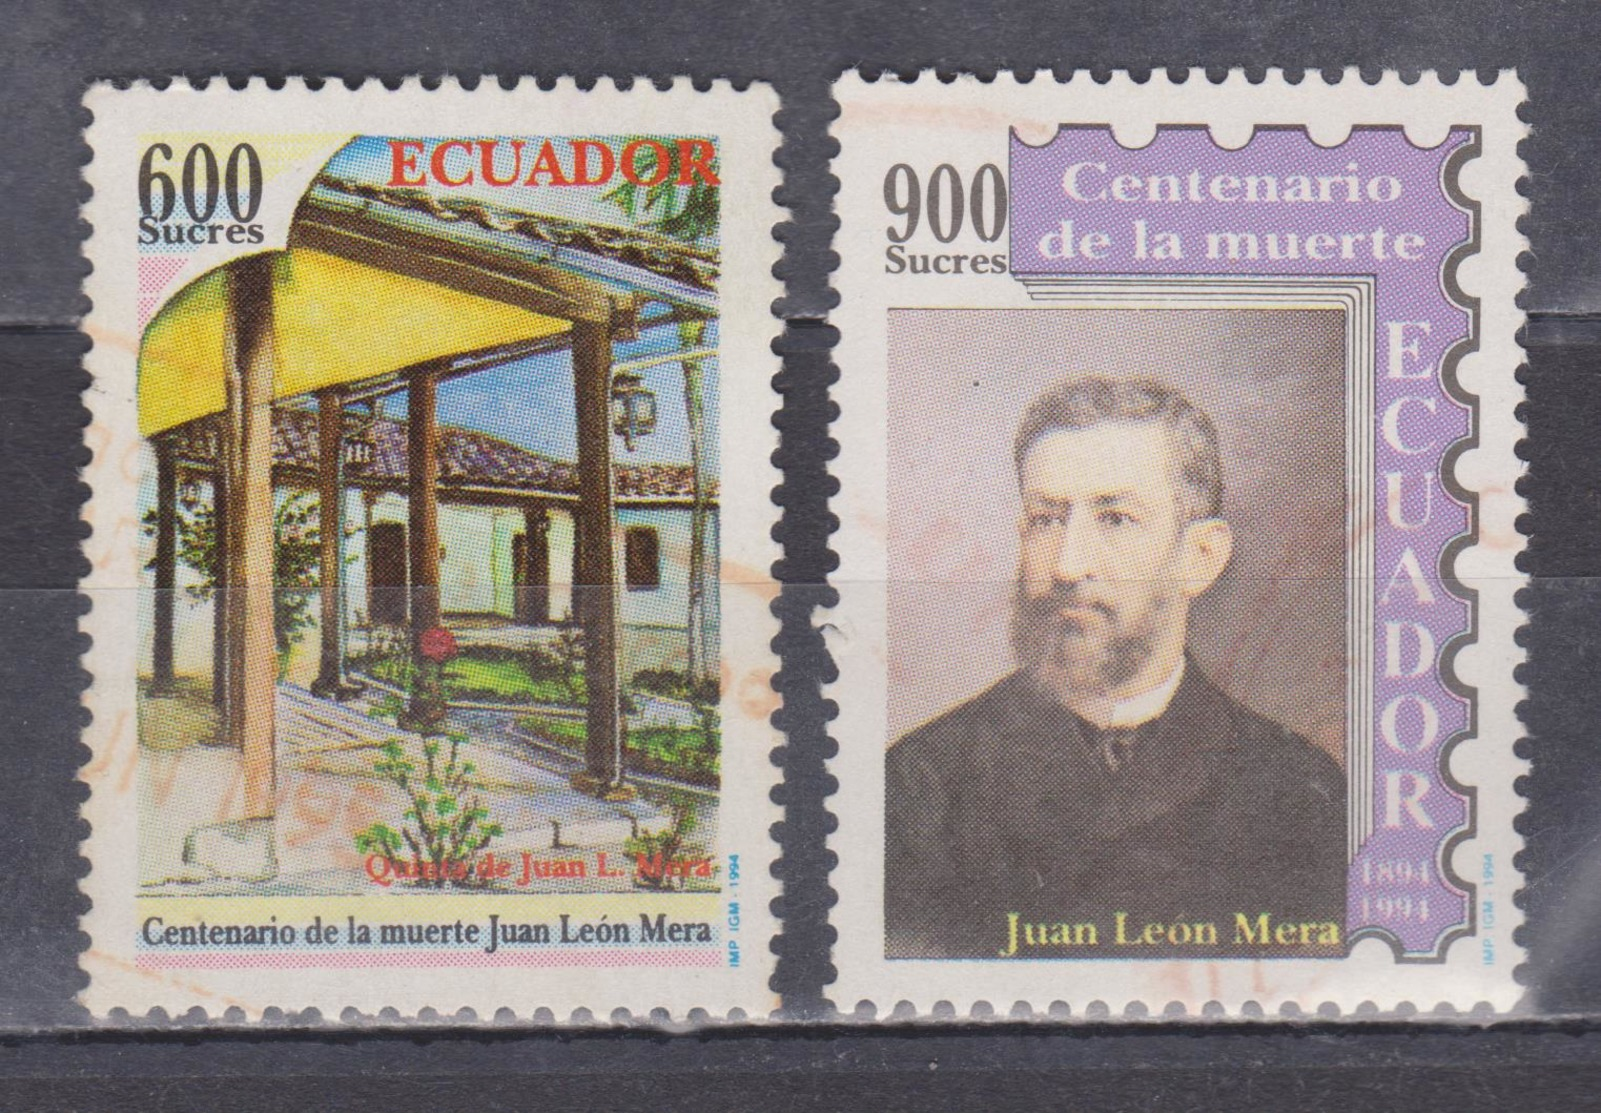 ECUADOR 1994 JUAN LEON MERA NATIONAL ANTHEM COMPOSER DEATH CENTENARY CANCELLED SC# 1356-1357 - Ecuador